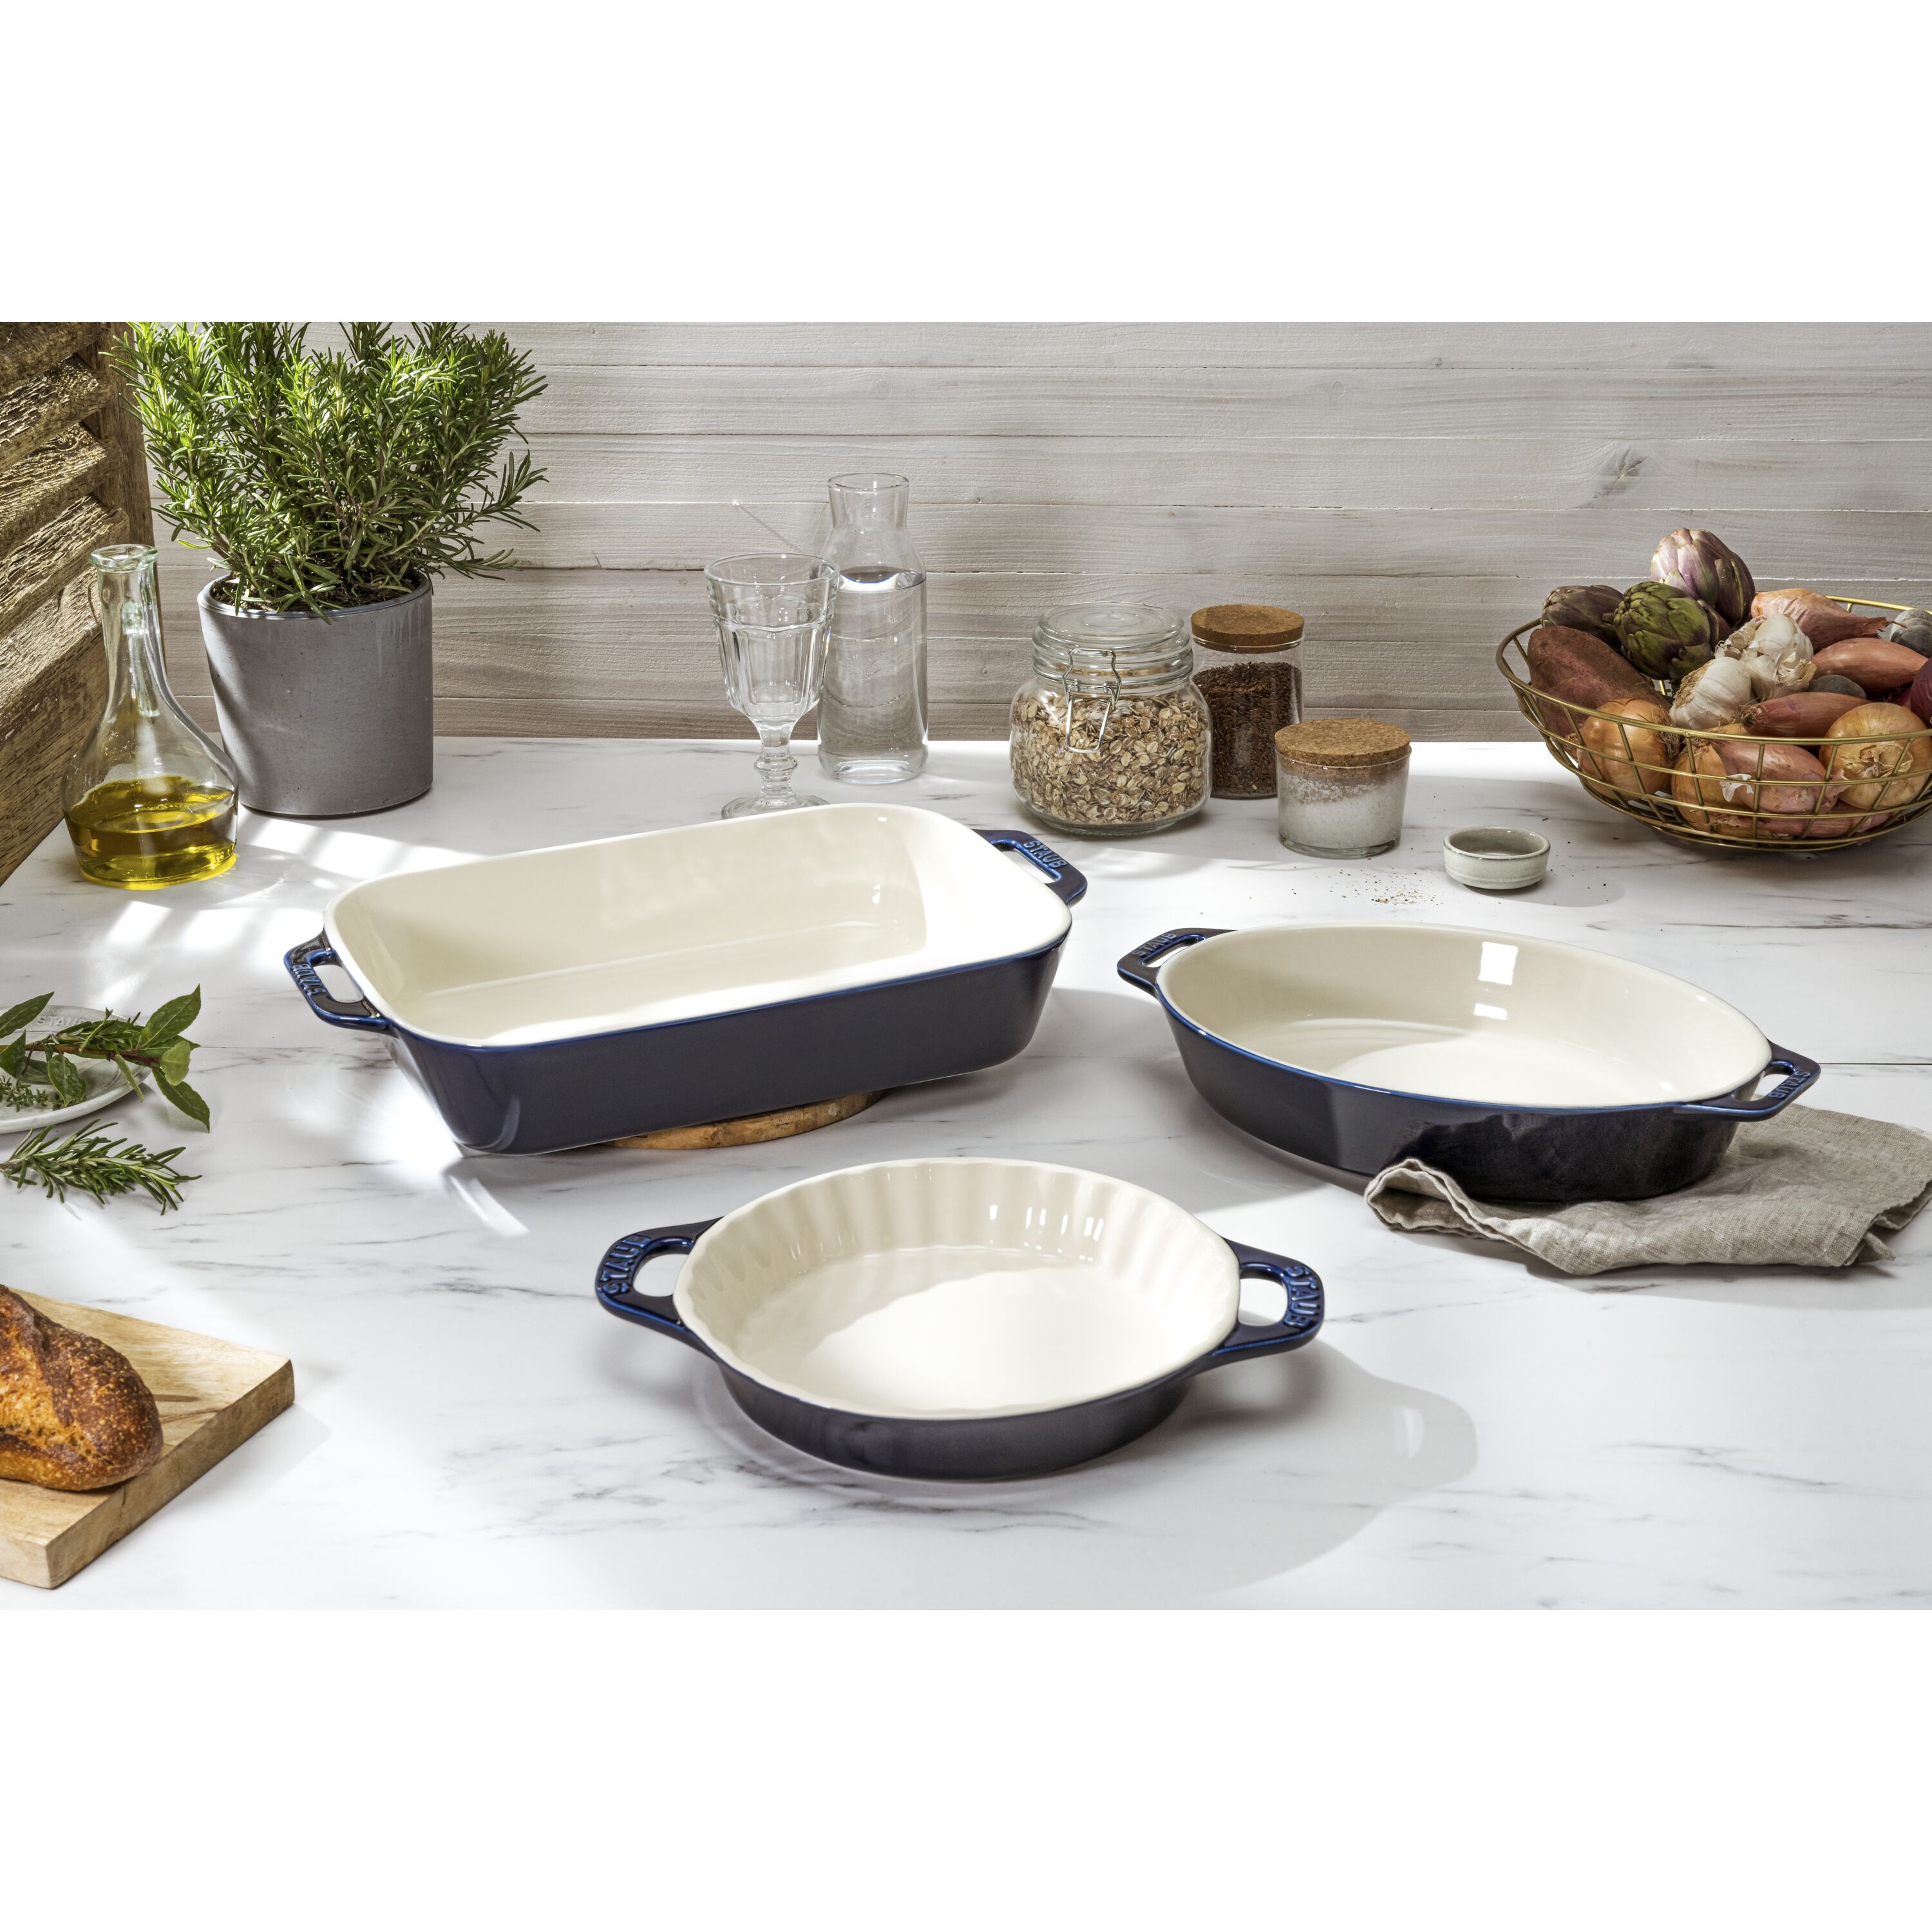 Staub Ceramics 3-pc Mixed Baking Dish Set - Cherry, 3-pc - Harris Teeter